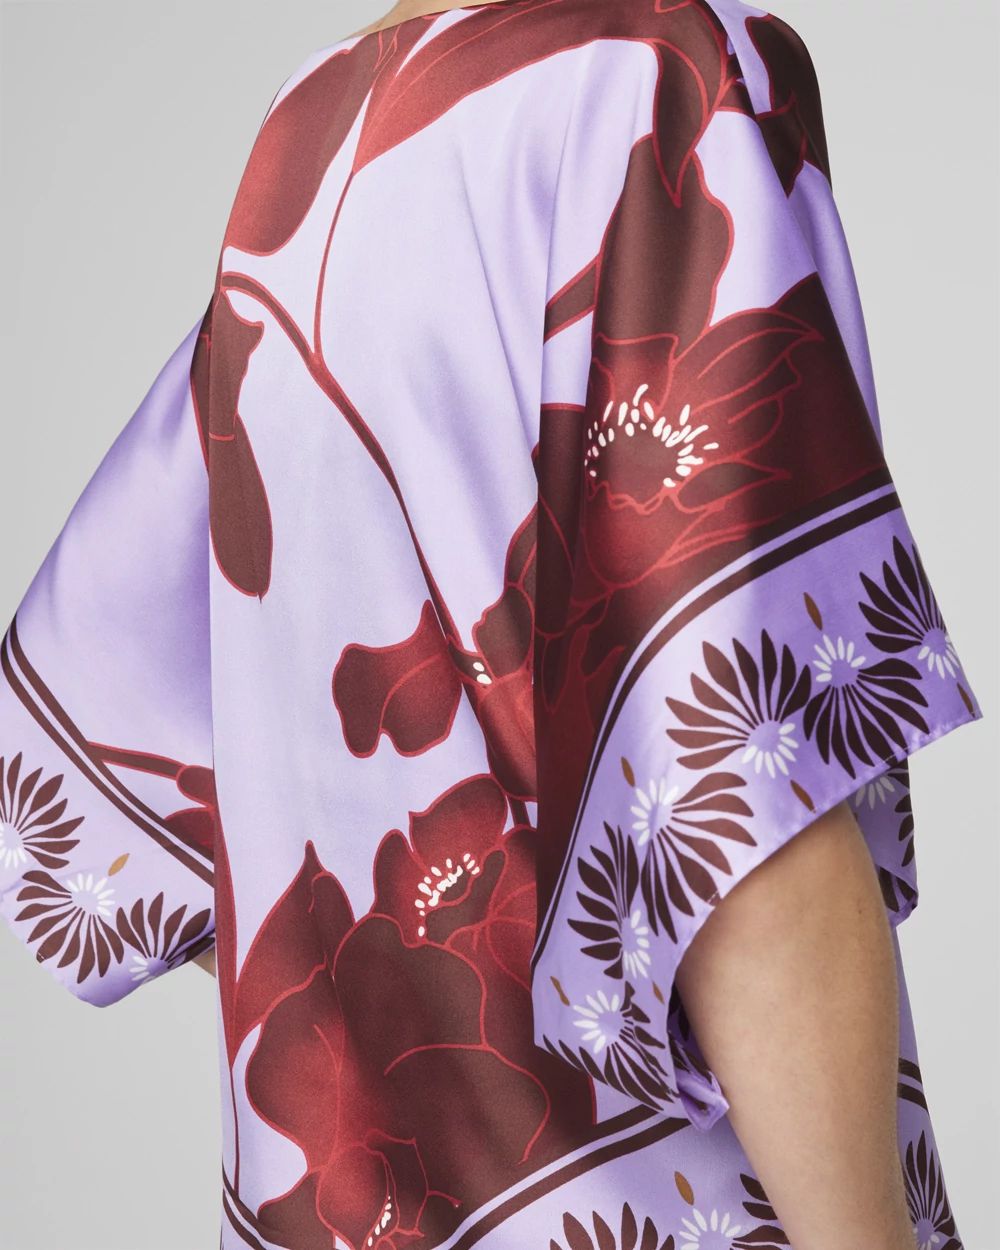 Satin Kimono Sleeve Blouse click to view larger image.